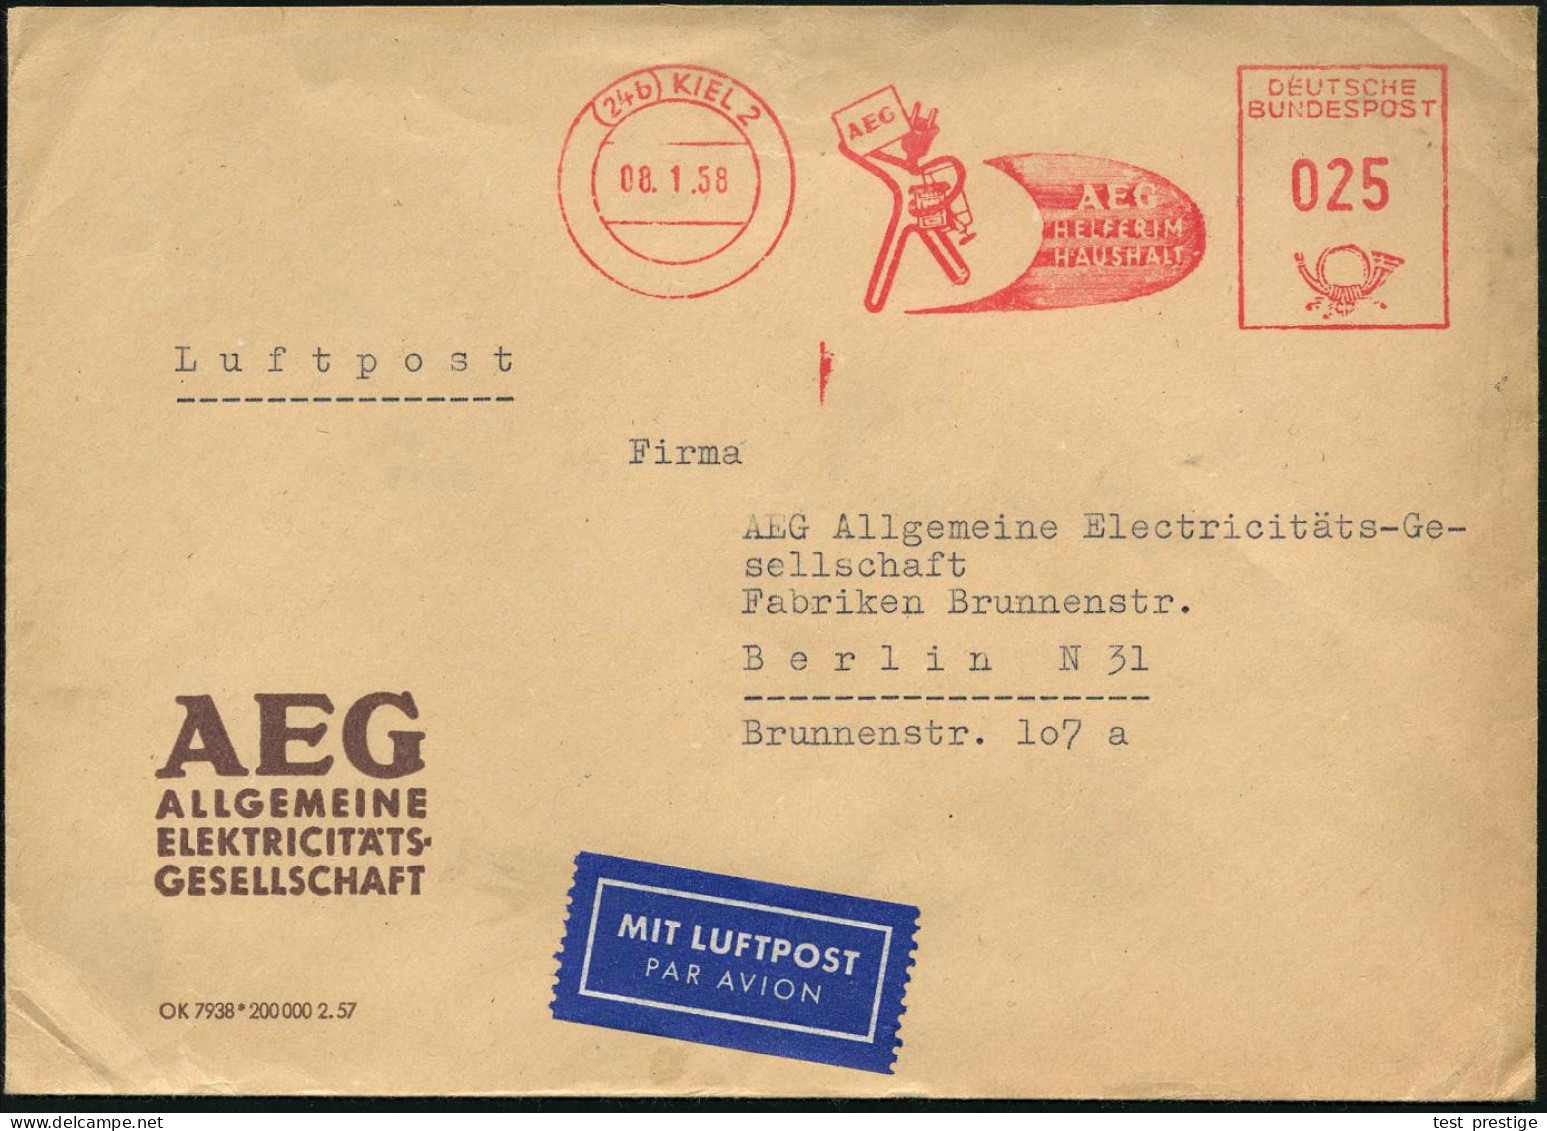 (24b) KIEL 2/ AEG/ HELFER IM/ HAUSHALT 1958 (8.1.) AFS Francotyp 025 Pf. "Elektro-Teufel" Aus Elektrokabel (tansportiert - Electricity